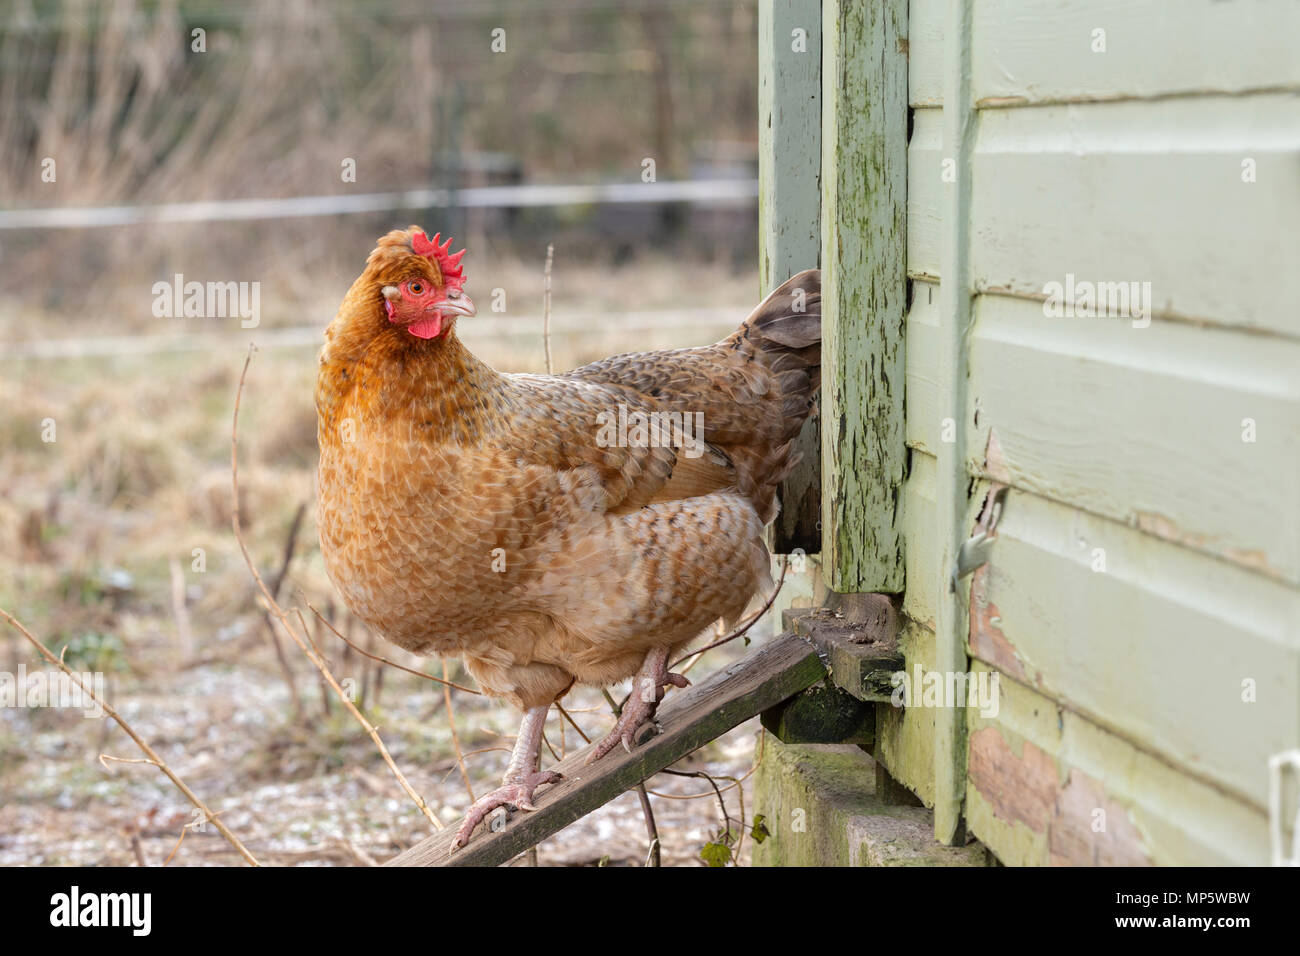 A light brown hen emerging from a hen house. Stock Photo